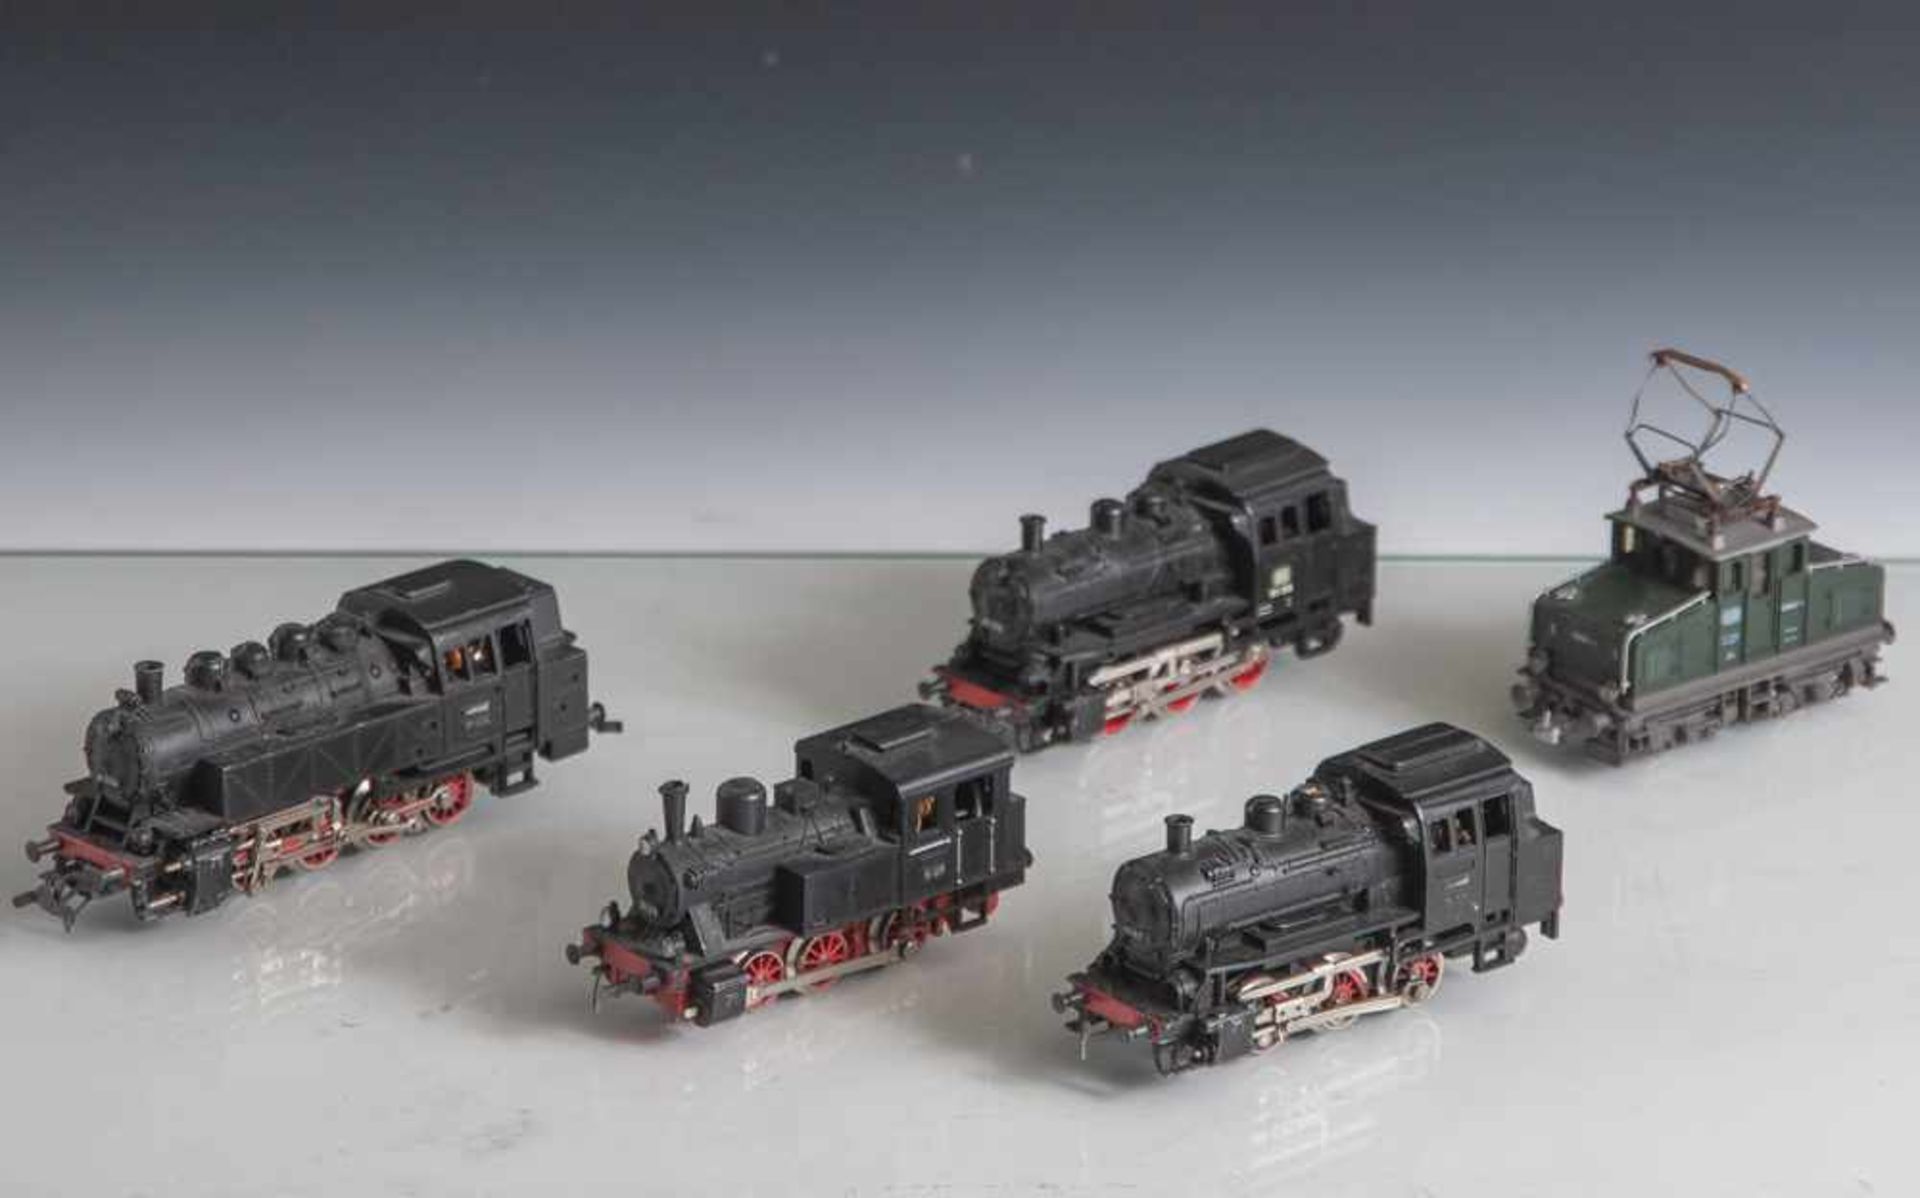 5 Lokomotiven, 4 x Märklin: 81004, 89005, 89006, 3029, 1 x Roco: 69002-3. Alters- und